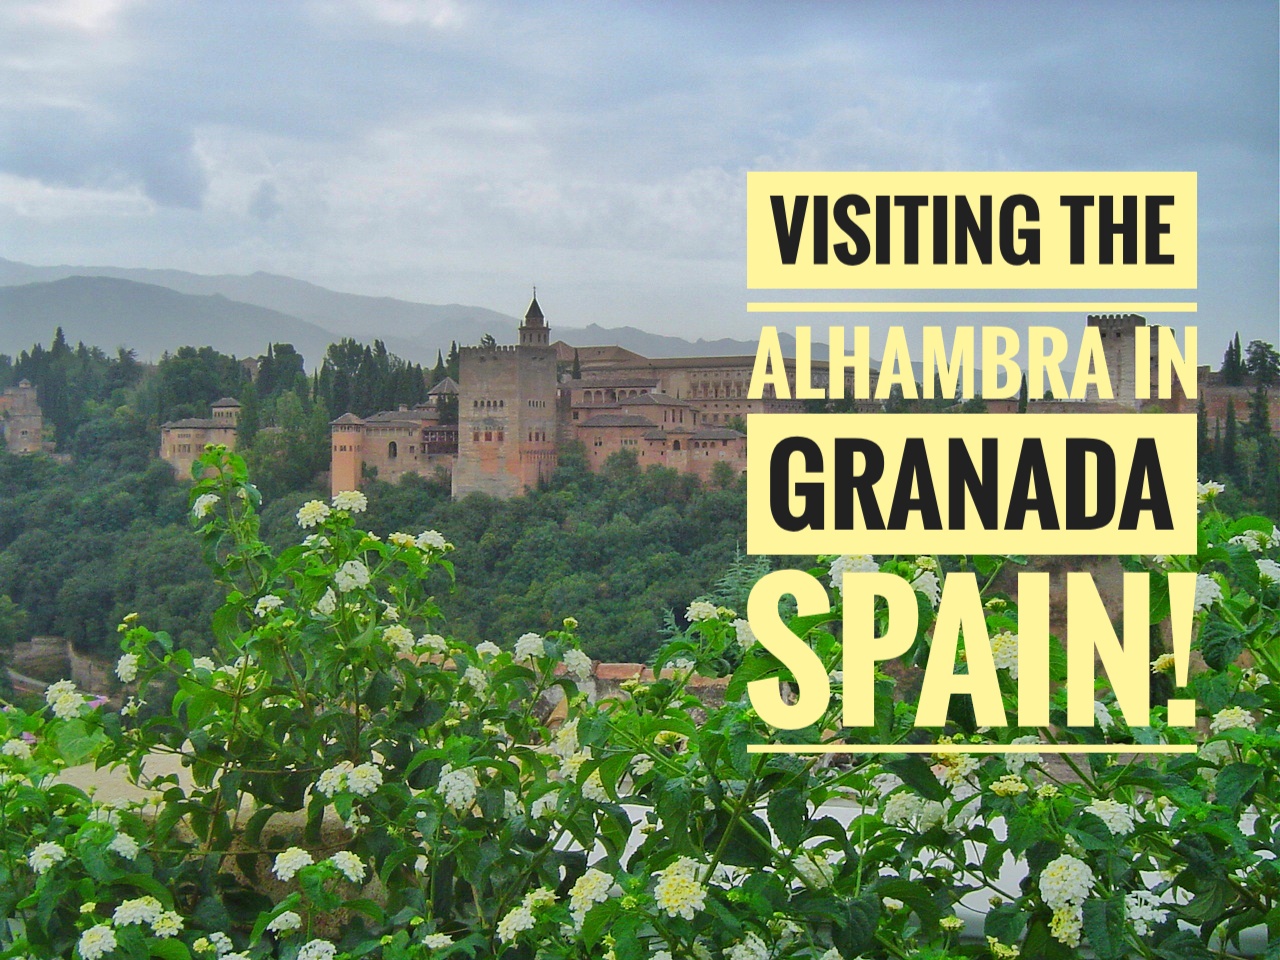 Visiting the Alhambra in Granada Spain!